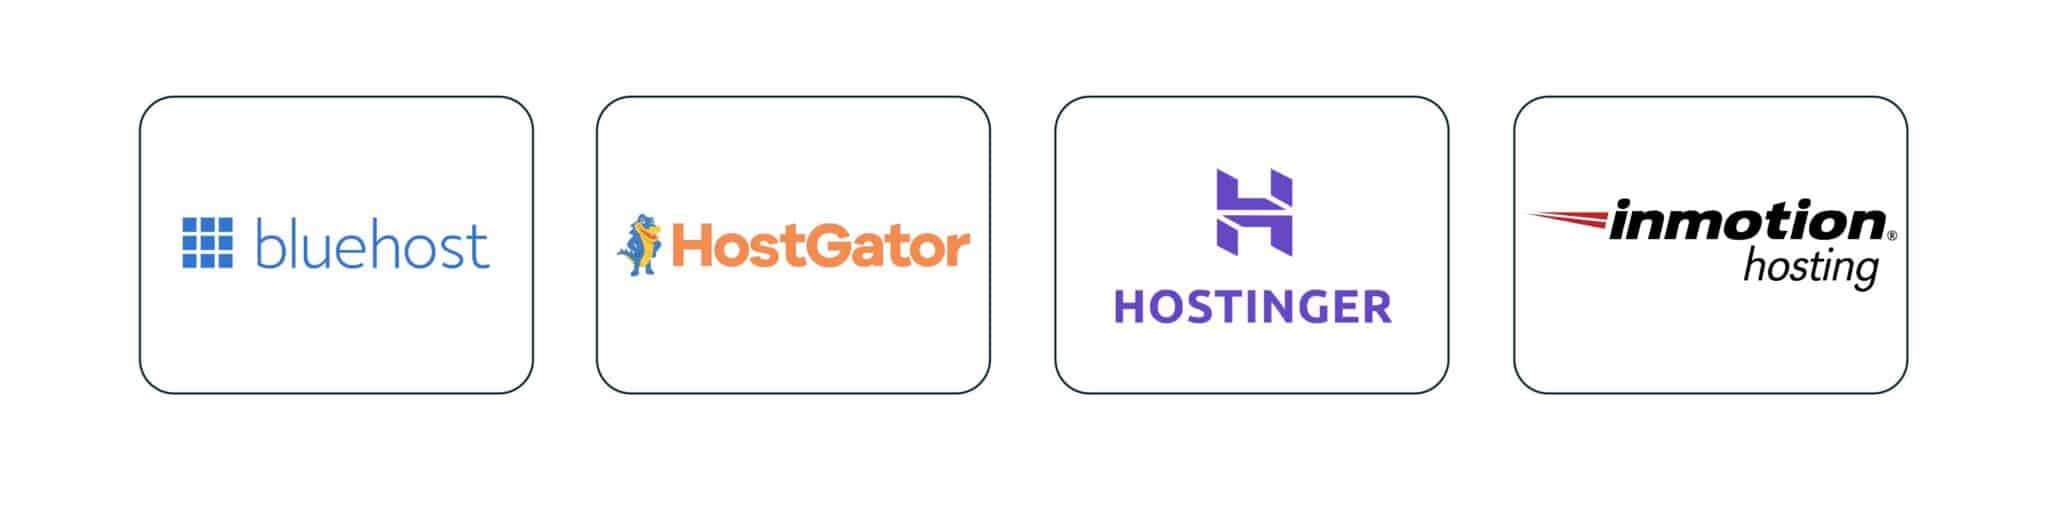 Website hosting examples